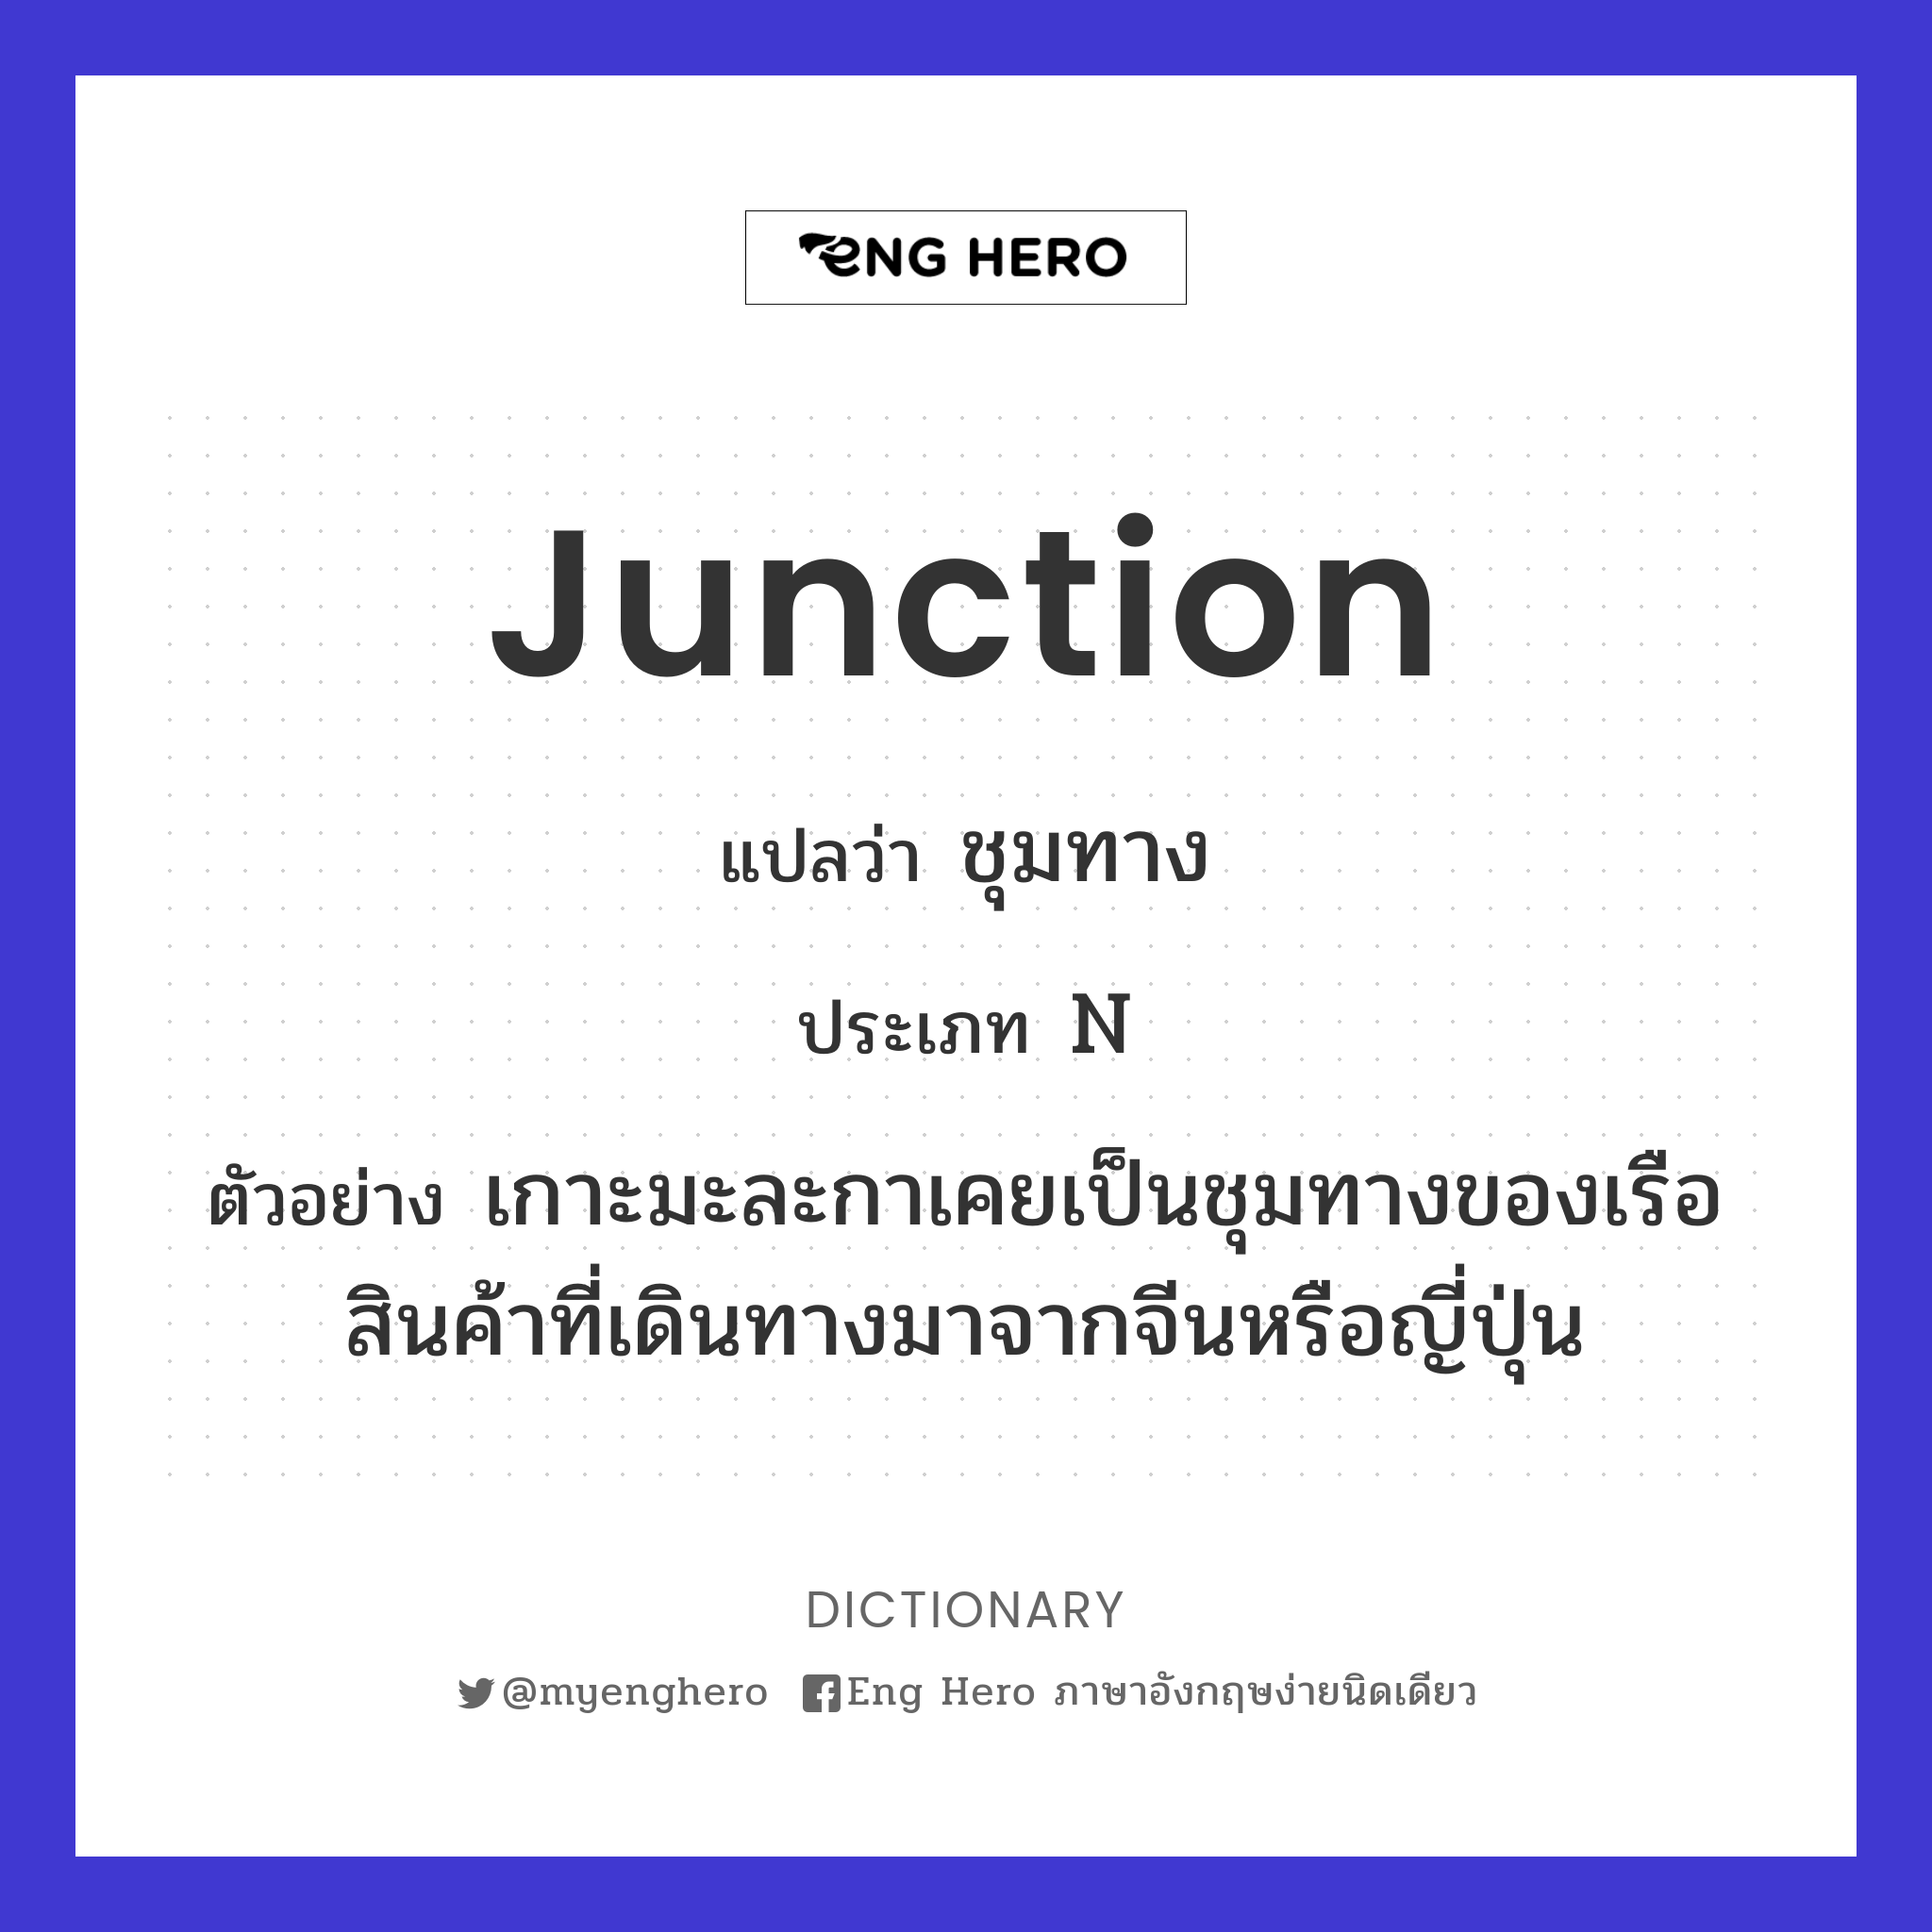 junction